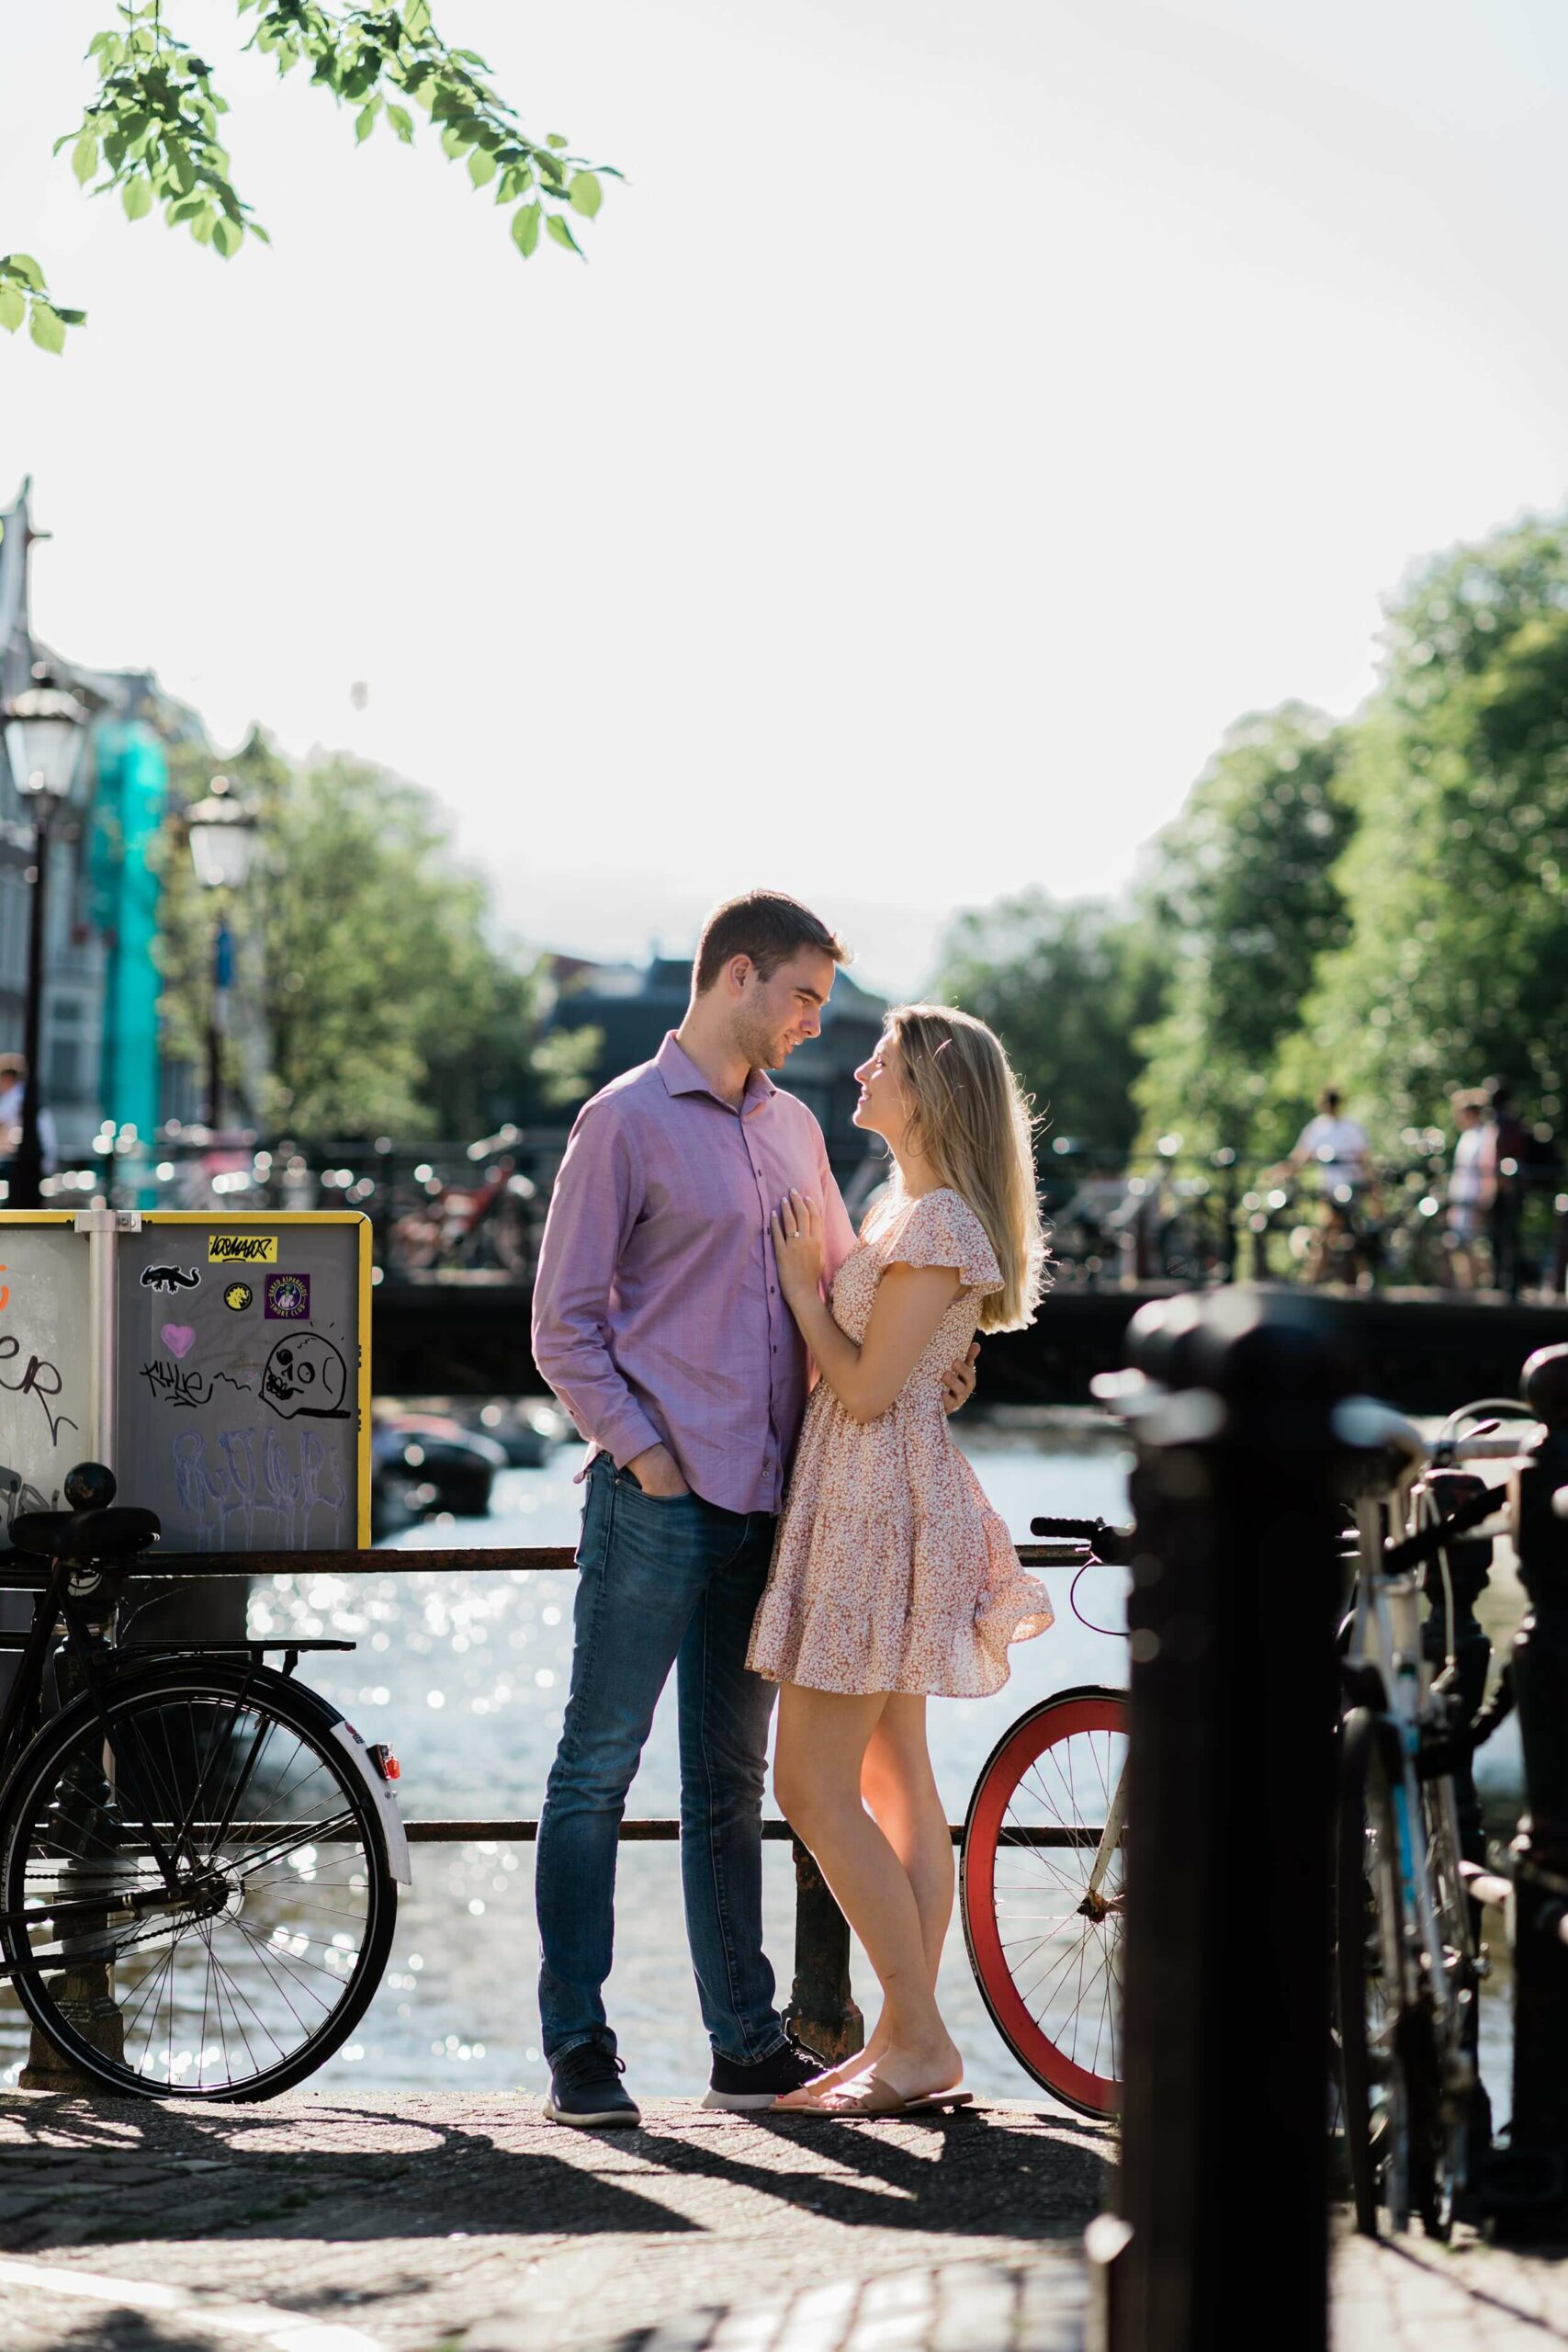 alt="Summer engagement couples photoshoot in Amsterdam Brouwersgracht"